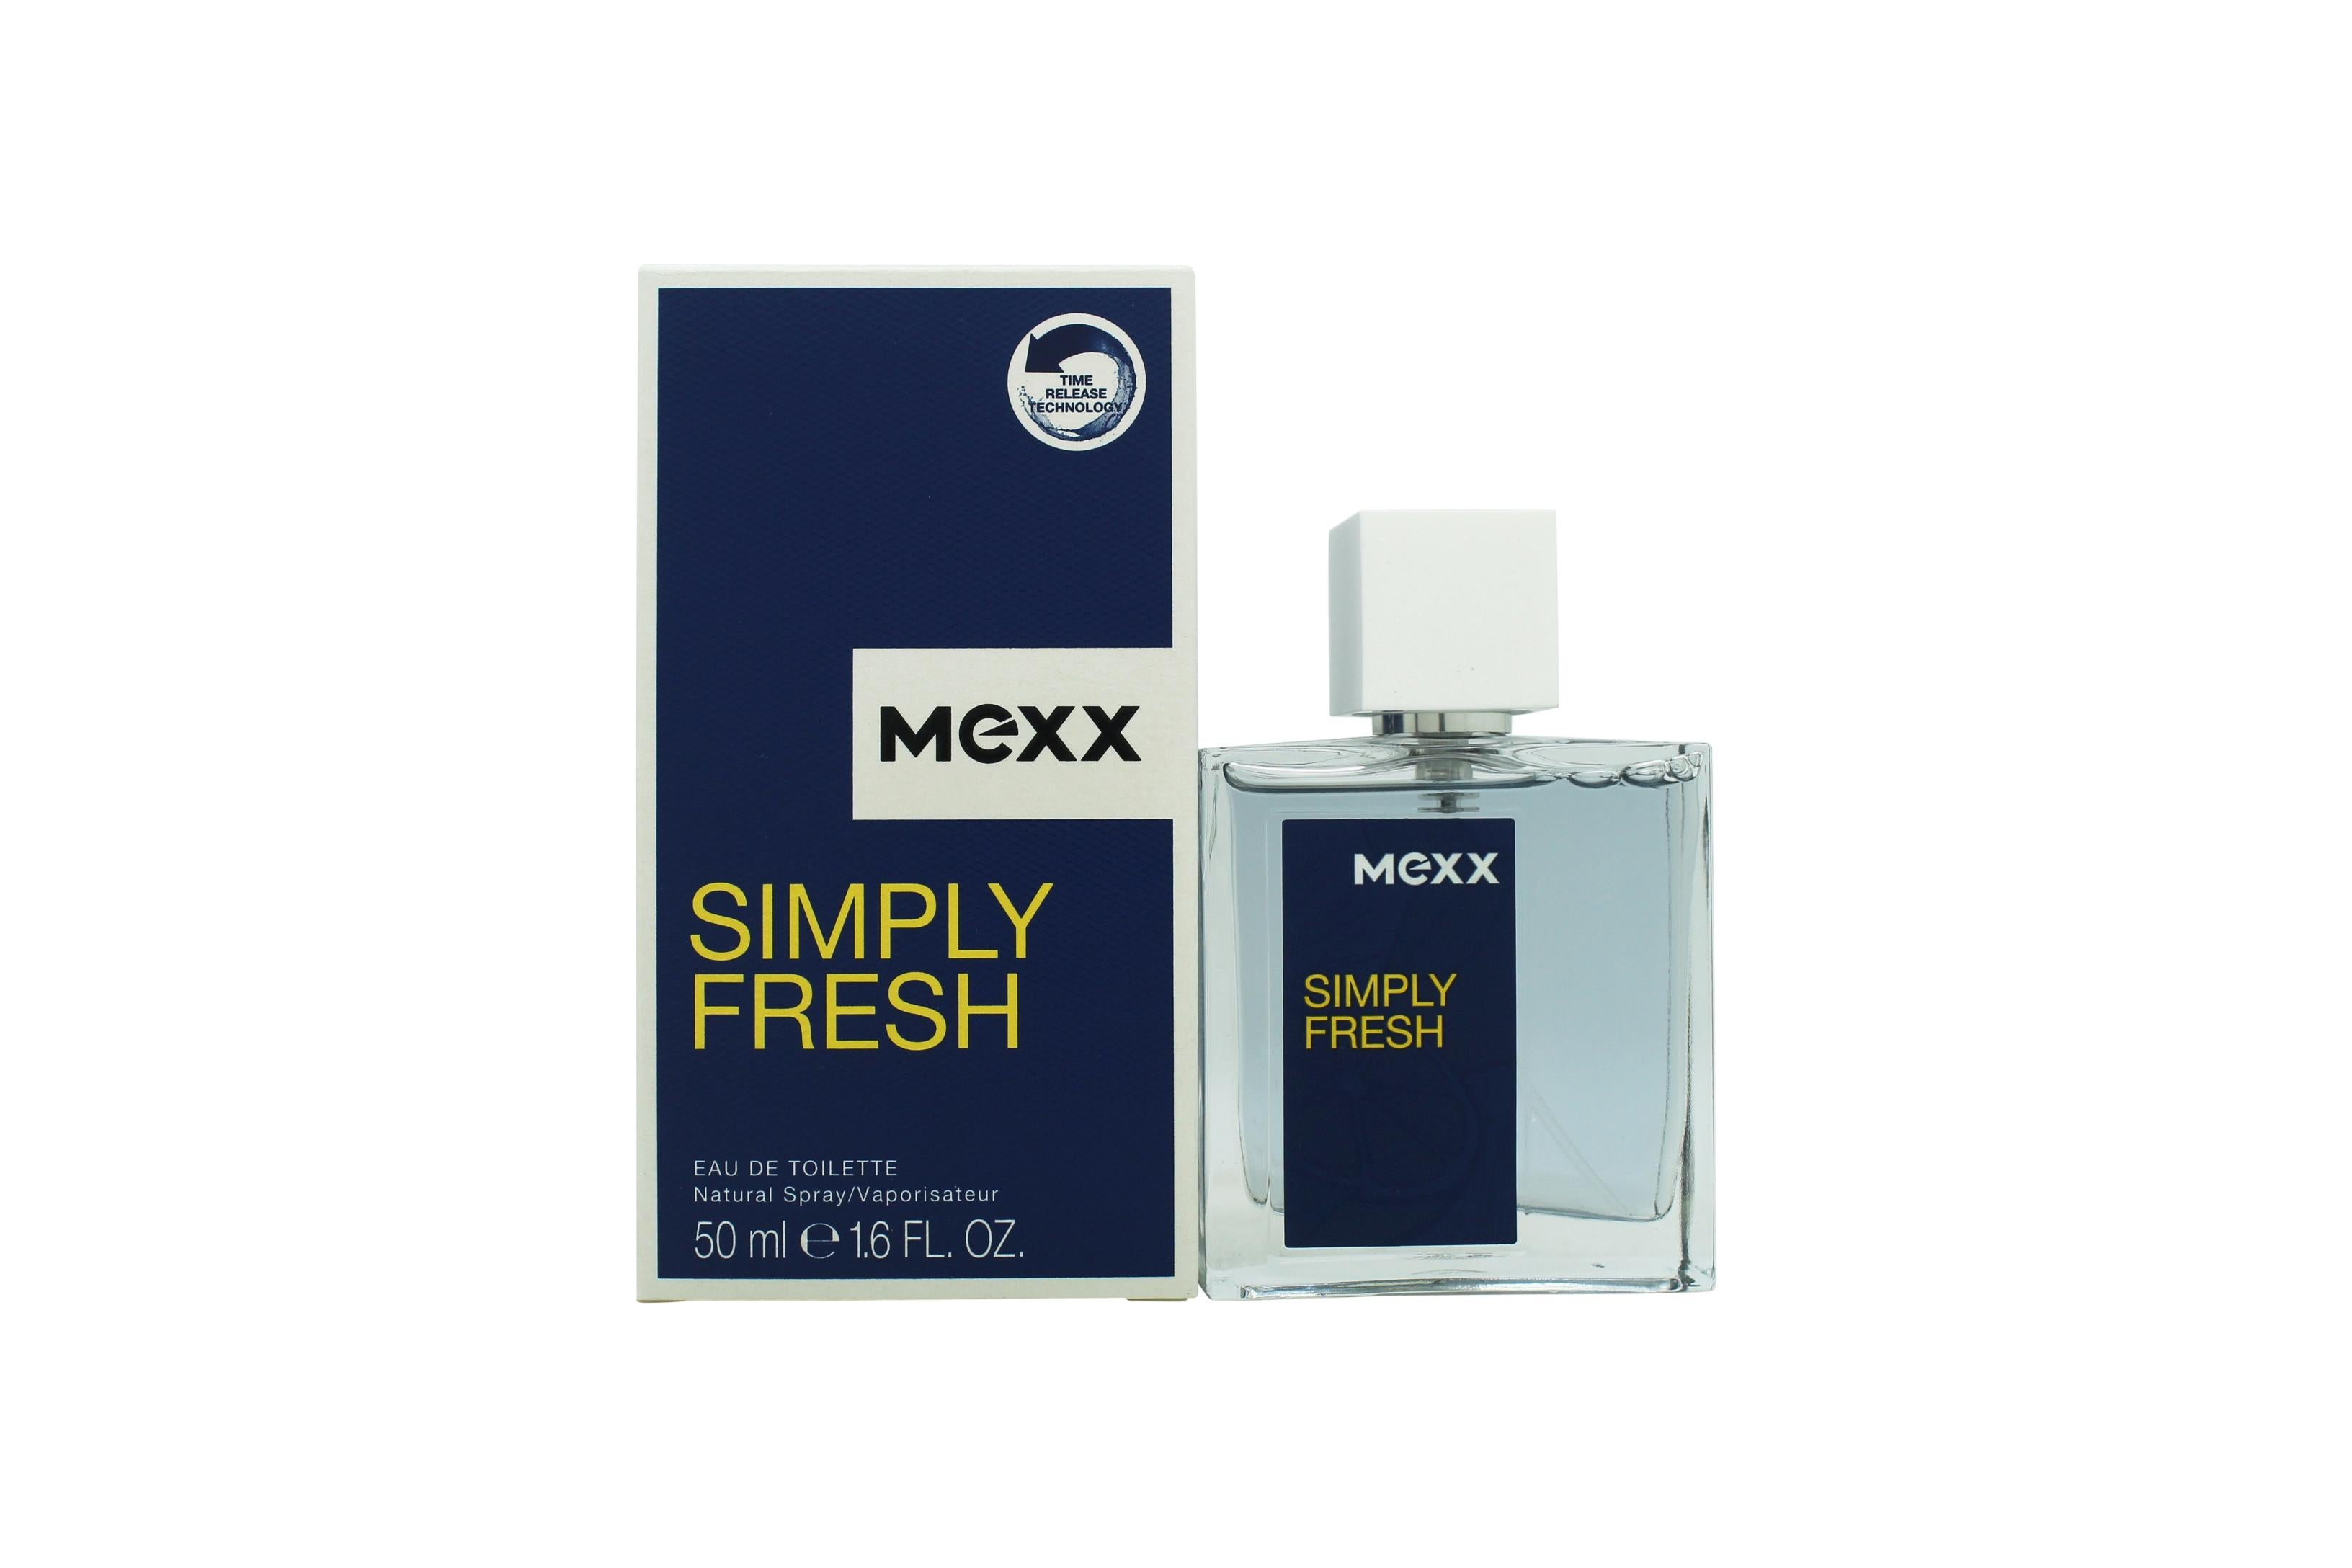 View Mexx Simply Fresh Eau de Toilette 50ml Spray information